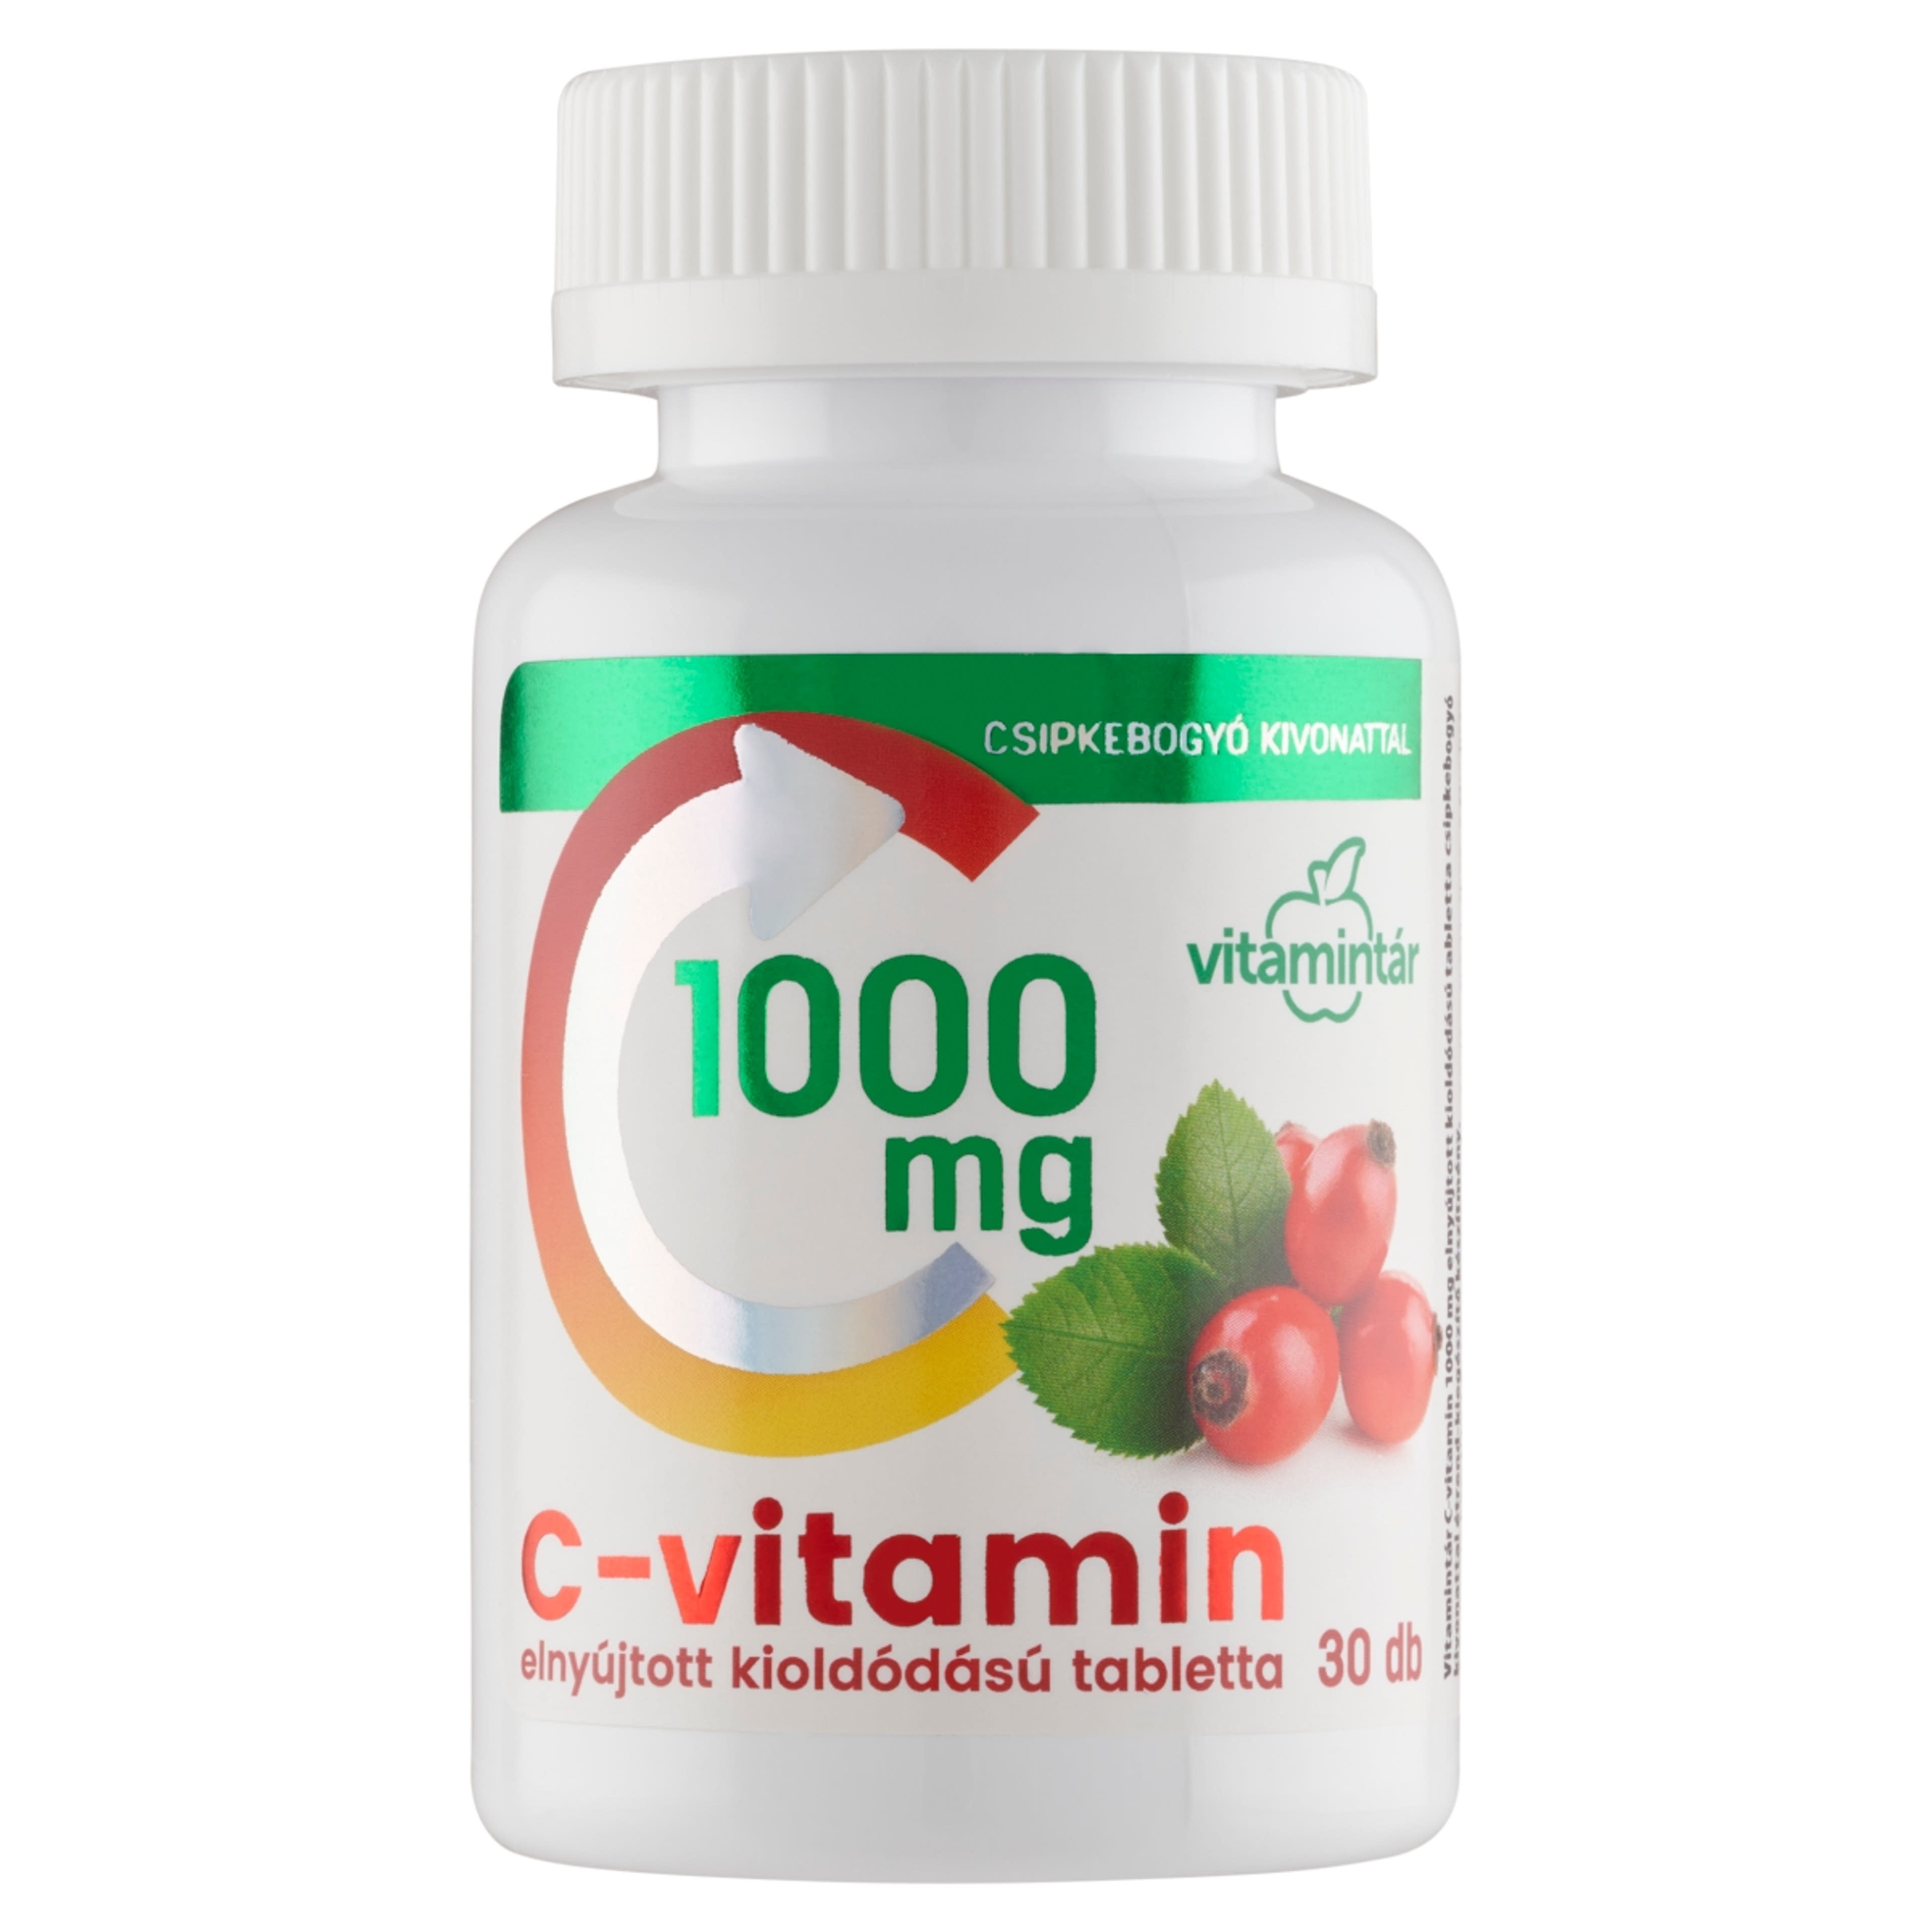 Vitamintár C-Vitamin Csipkebogyó Kivonattal 1000mg Tabletta - 30 db